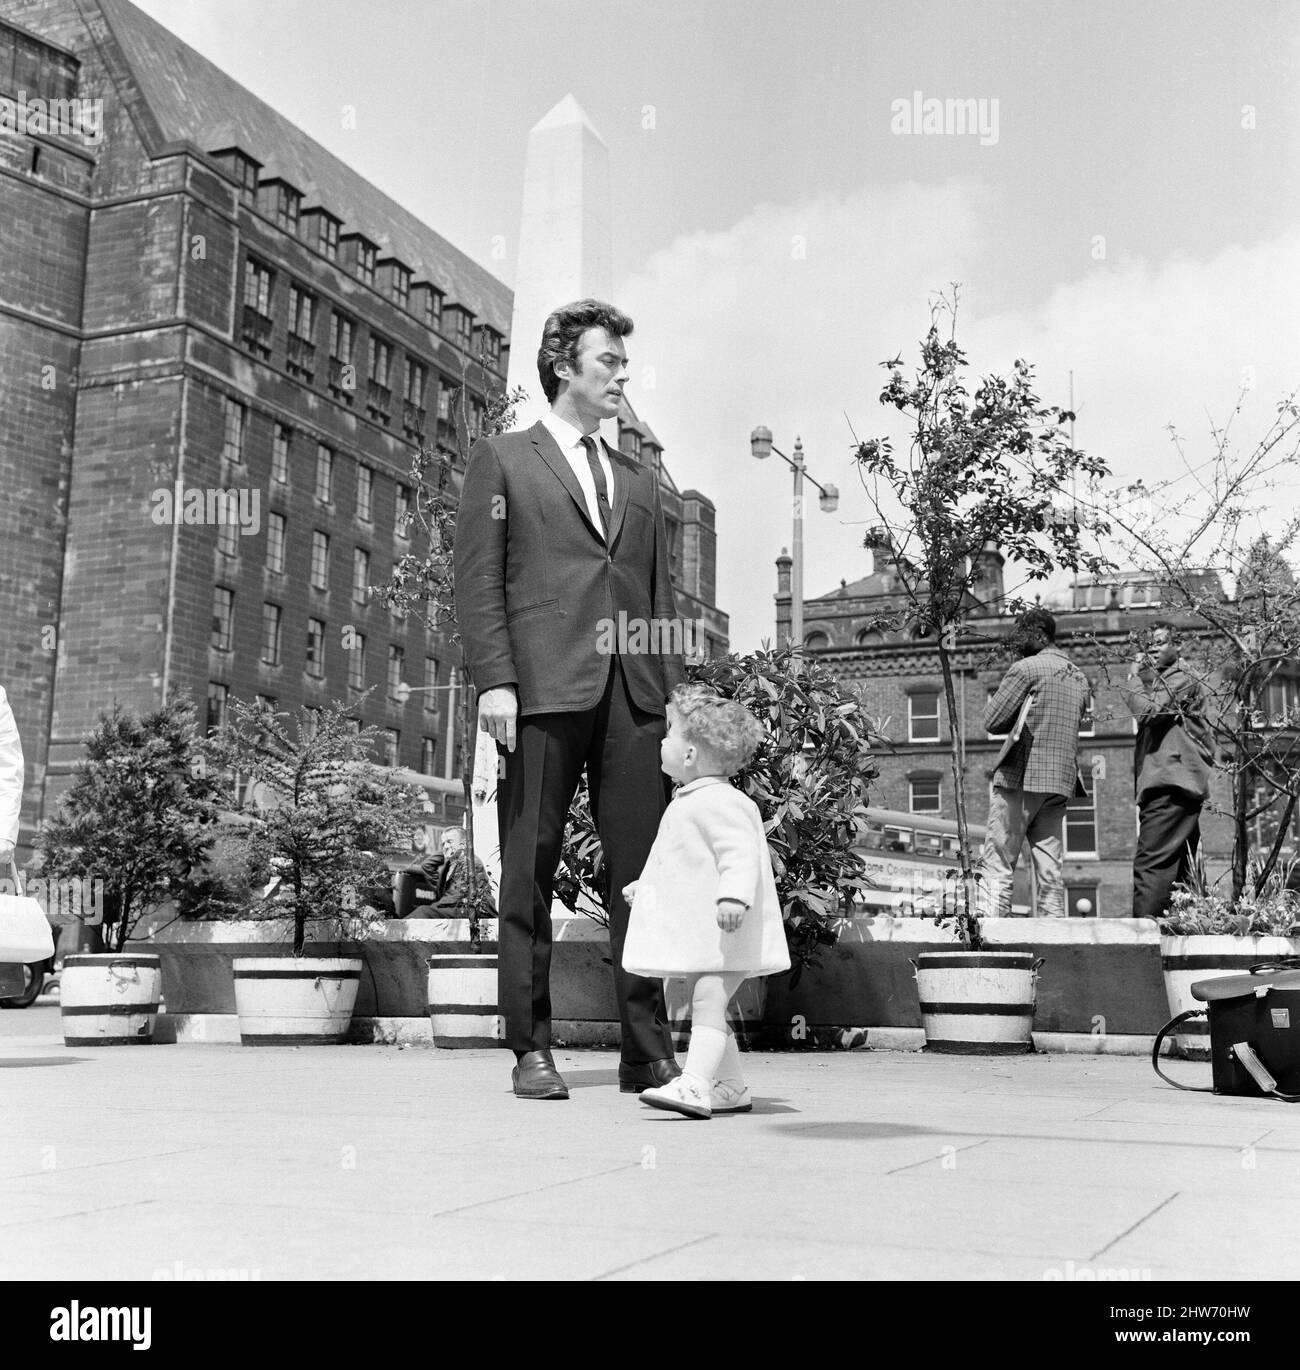 6ft 3 Clint Eastwood, abgebildet auf dem St. Peter's Square, Manchester, mit Antony Rixon, 18 Monate alt. Antony ist 32 cm groß. 12.. Juni 1967. Stockfoto